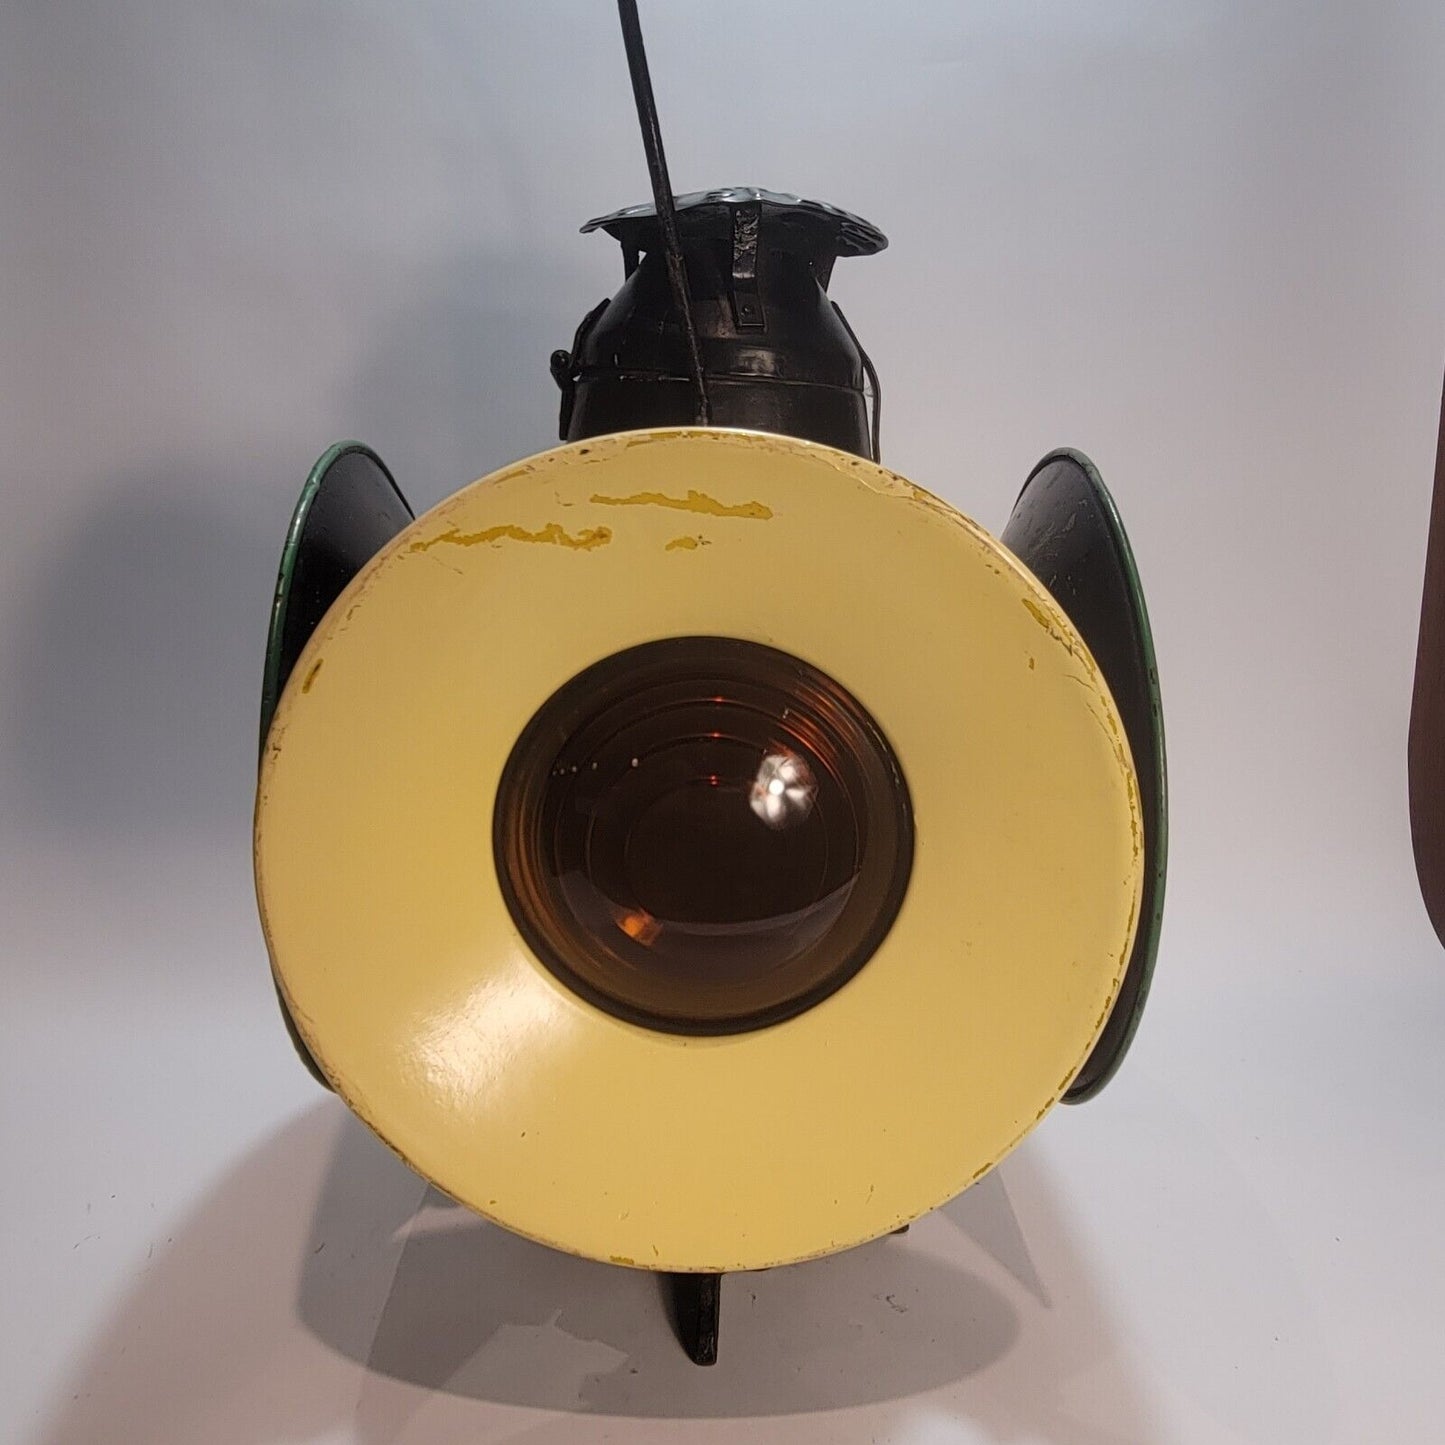 Handlan St. Louis 4 Way Railroad Lantern with Kopp Glass Lenses